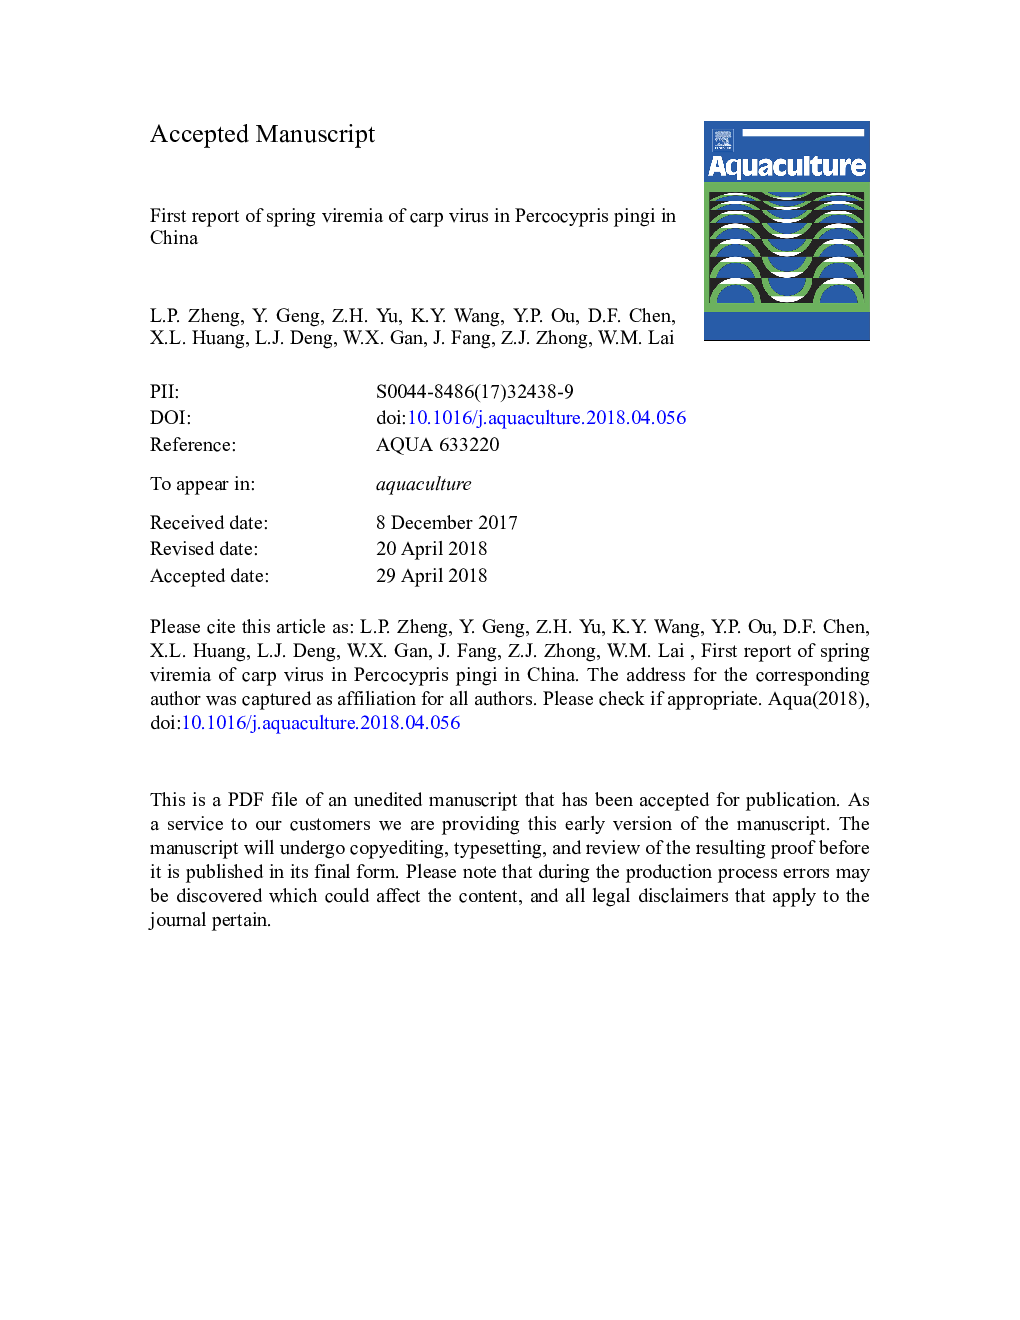 First report of spring viremia of carp virus in Percocypris pingi in China